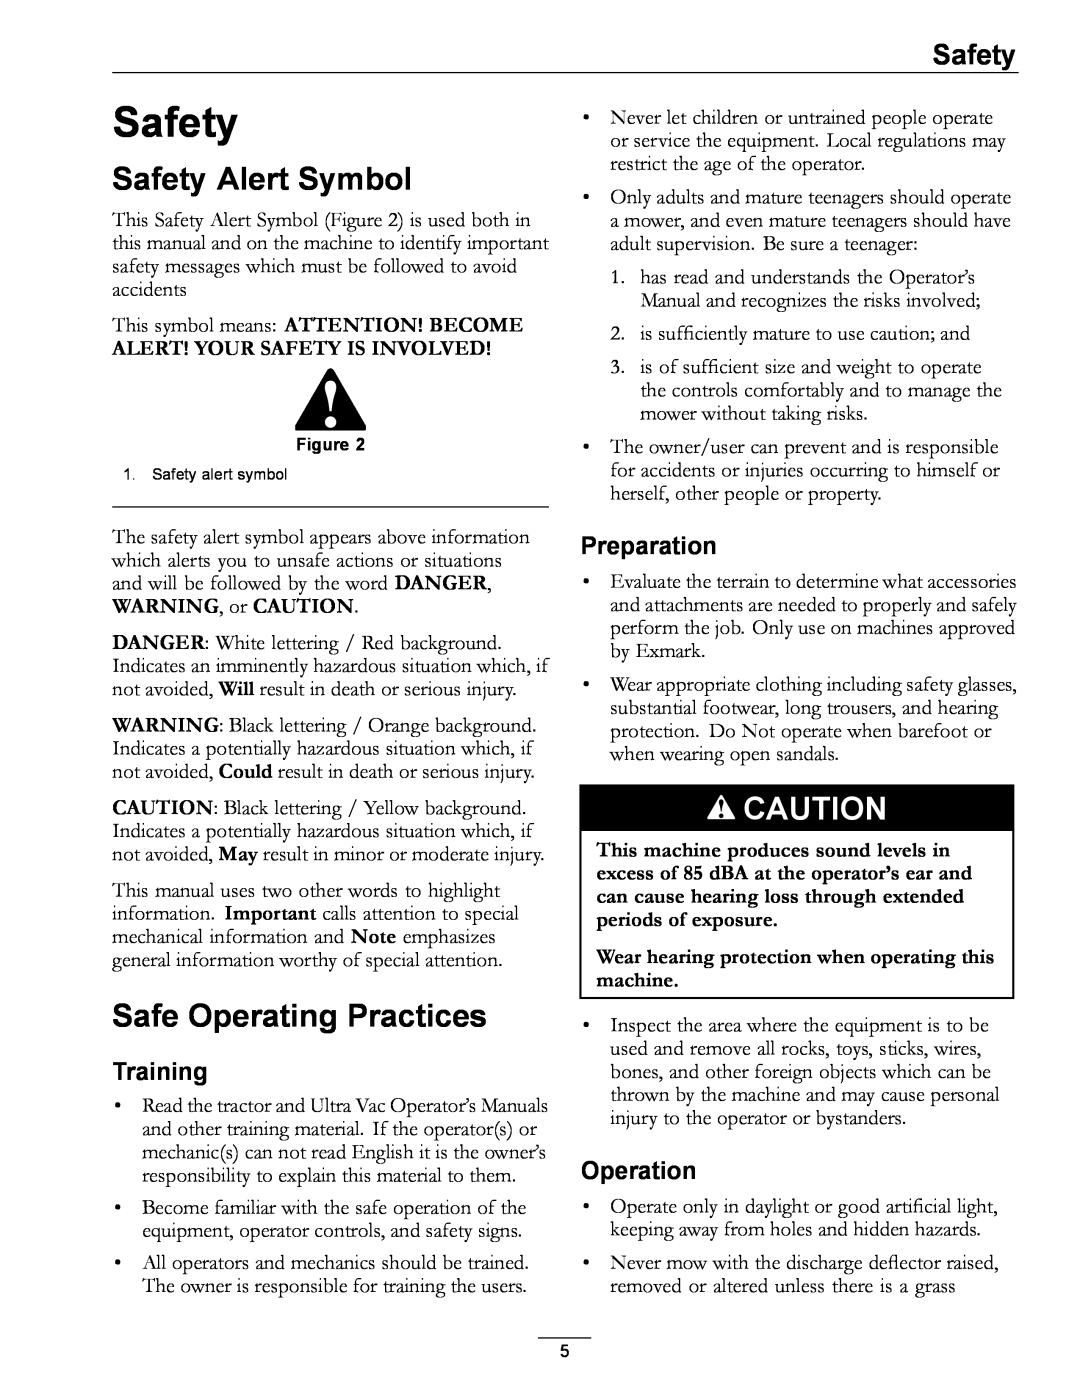 Exmark LAZER Z HP manual Safety Alert Symbol, Safe Operating Practices, Training, Preparation, Operation 